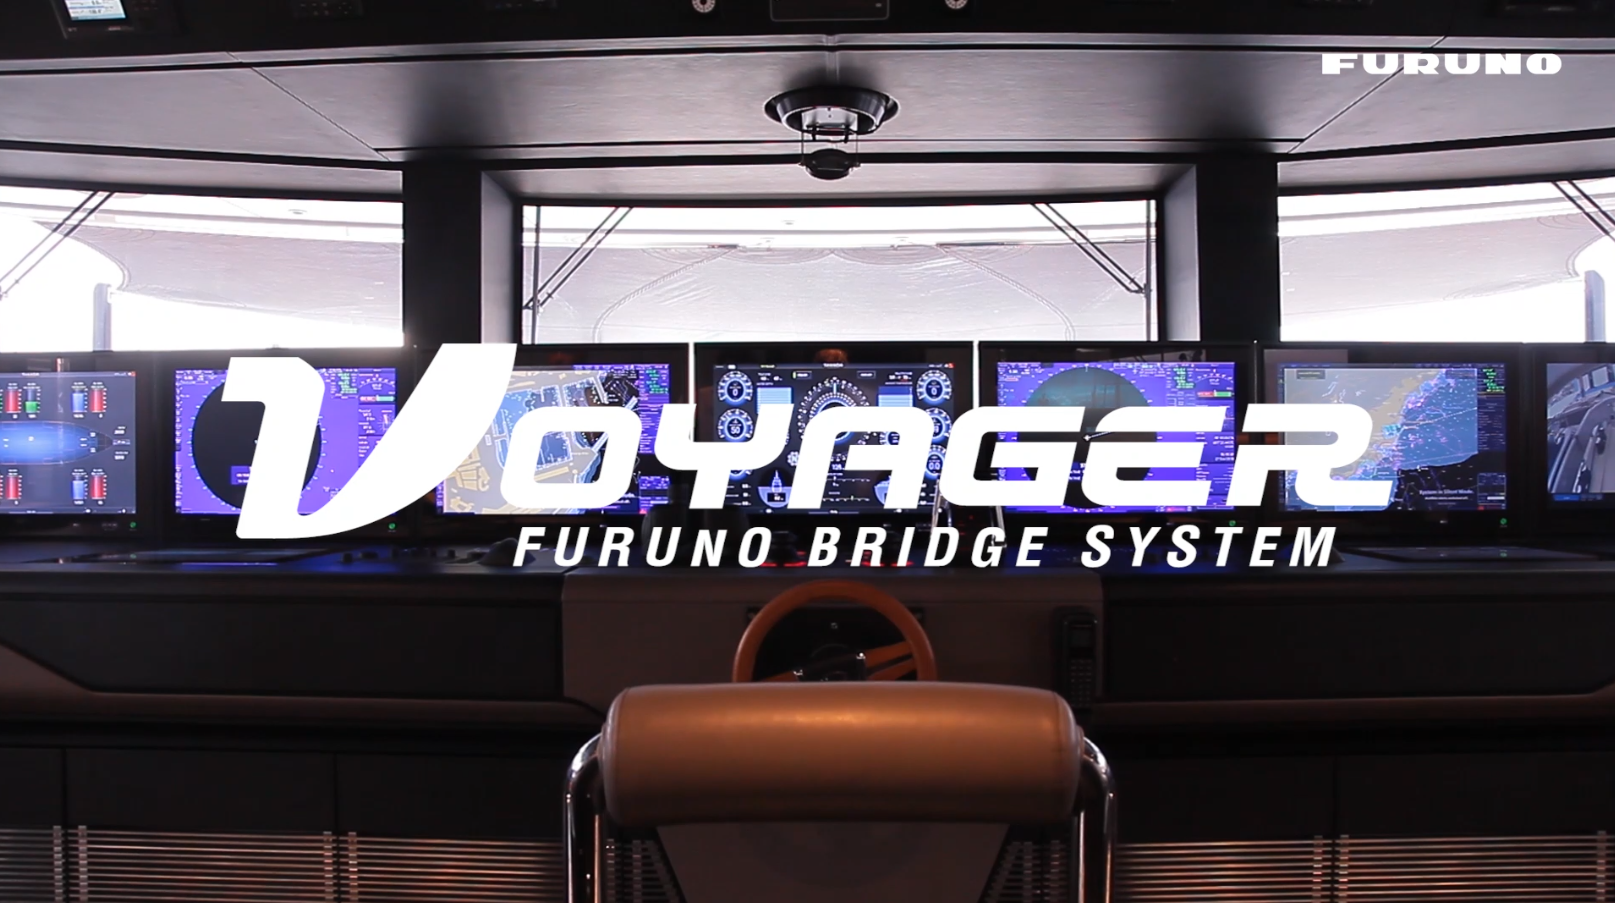 INS Voyager Bridge